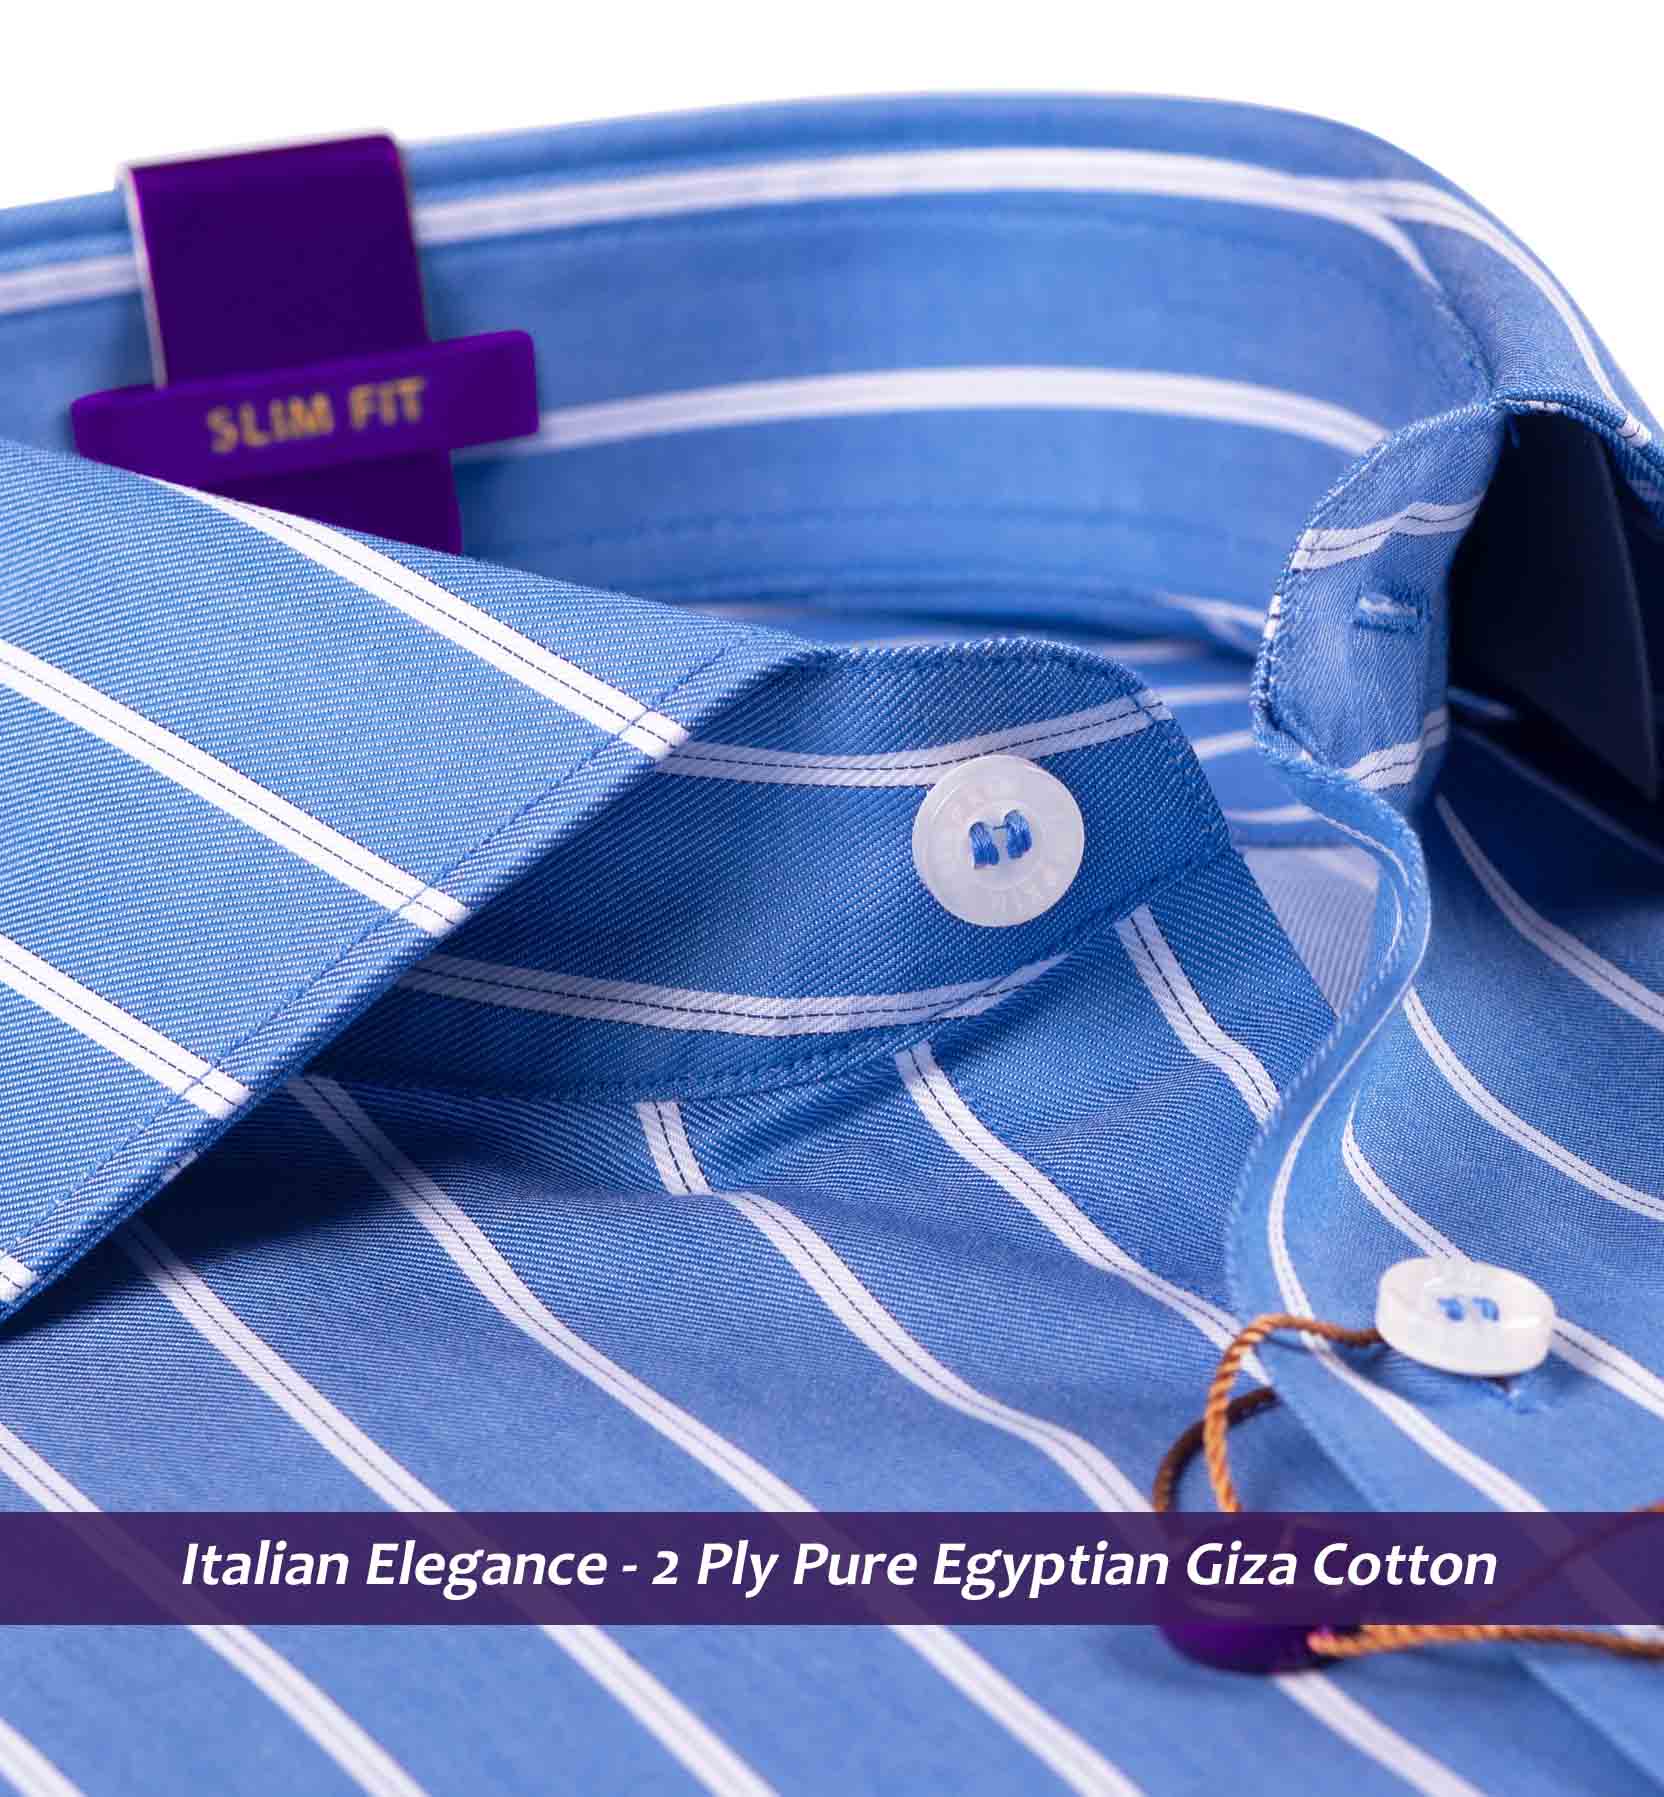 Monet- Cobalt Blue & White Magical Stripe - 2 Ply Pure Egyptian Giza Cotton